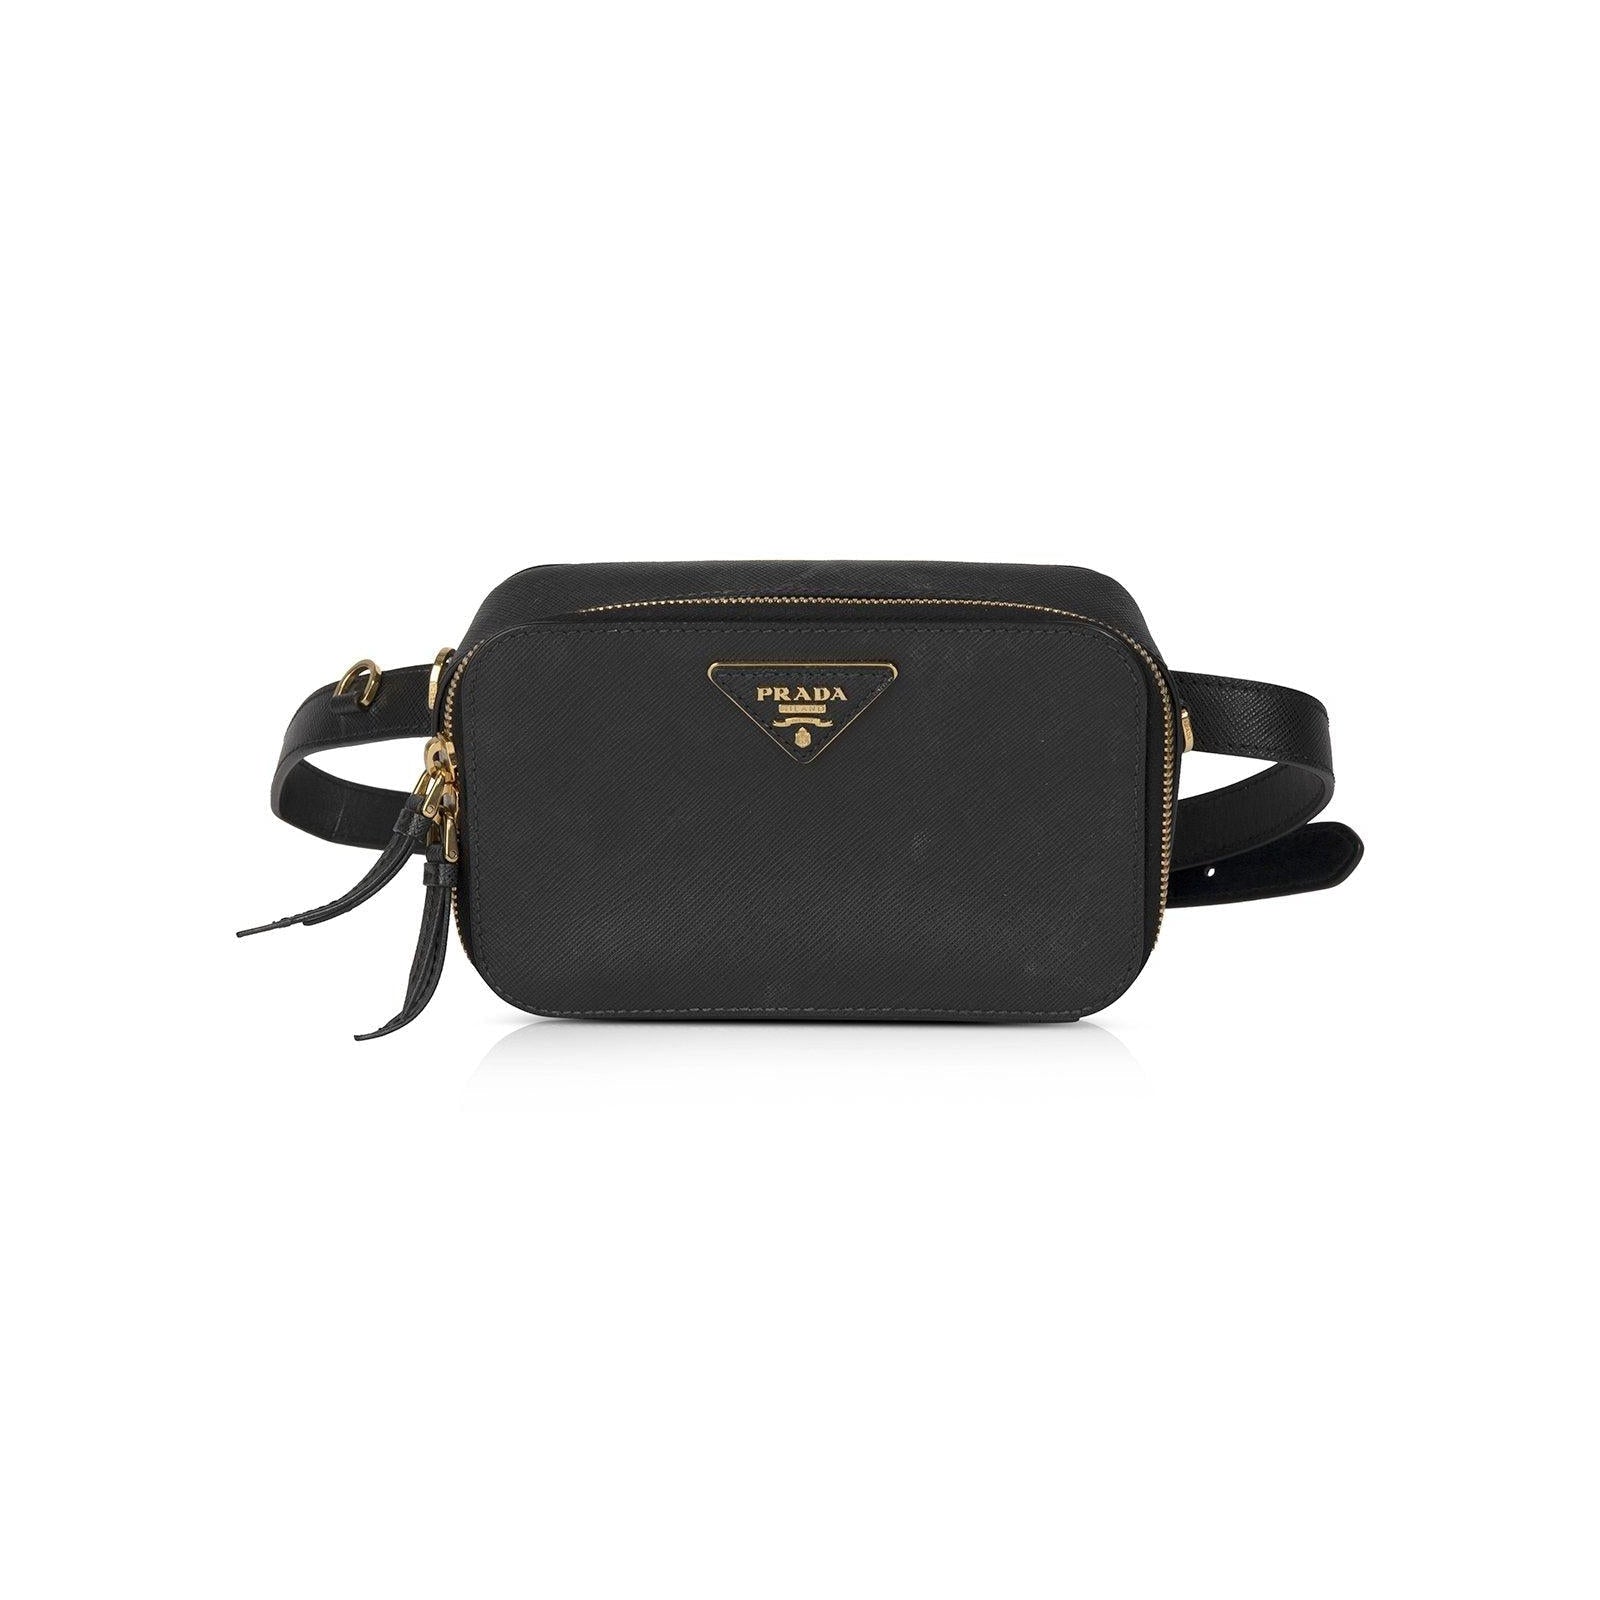 Prada Odette Saffiano Leather Belt Bag